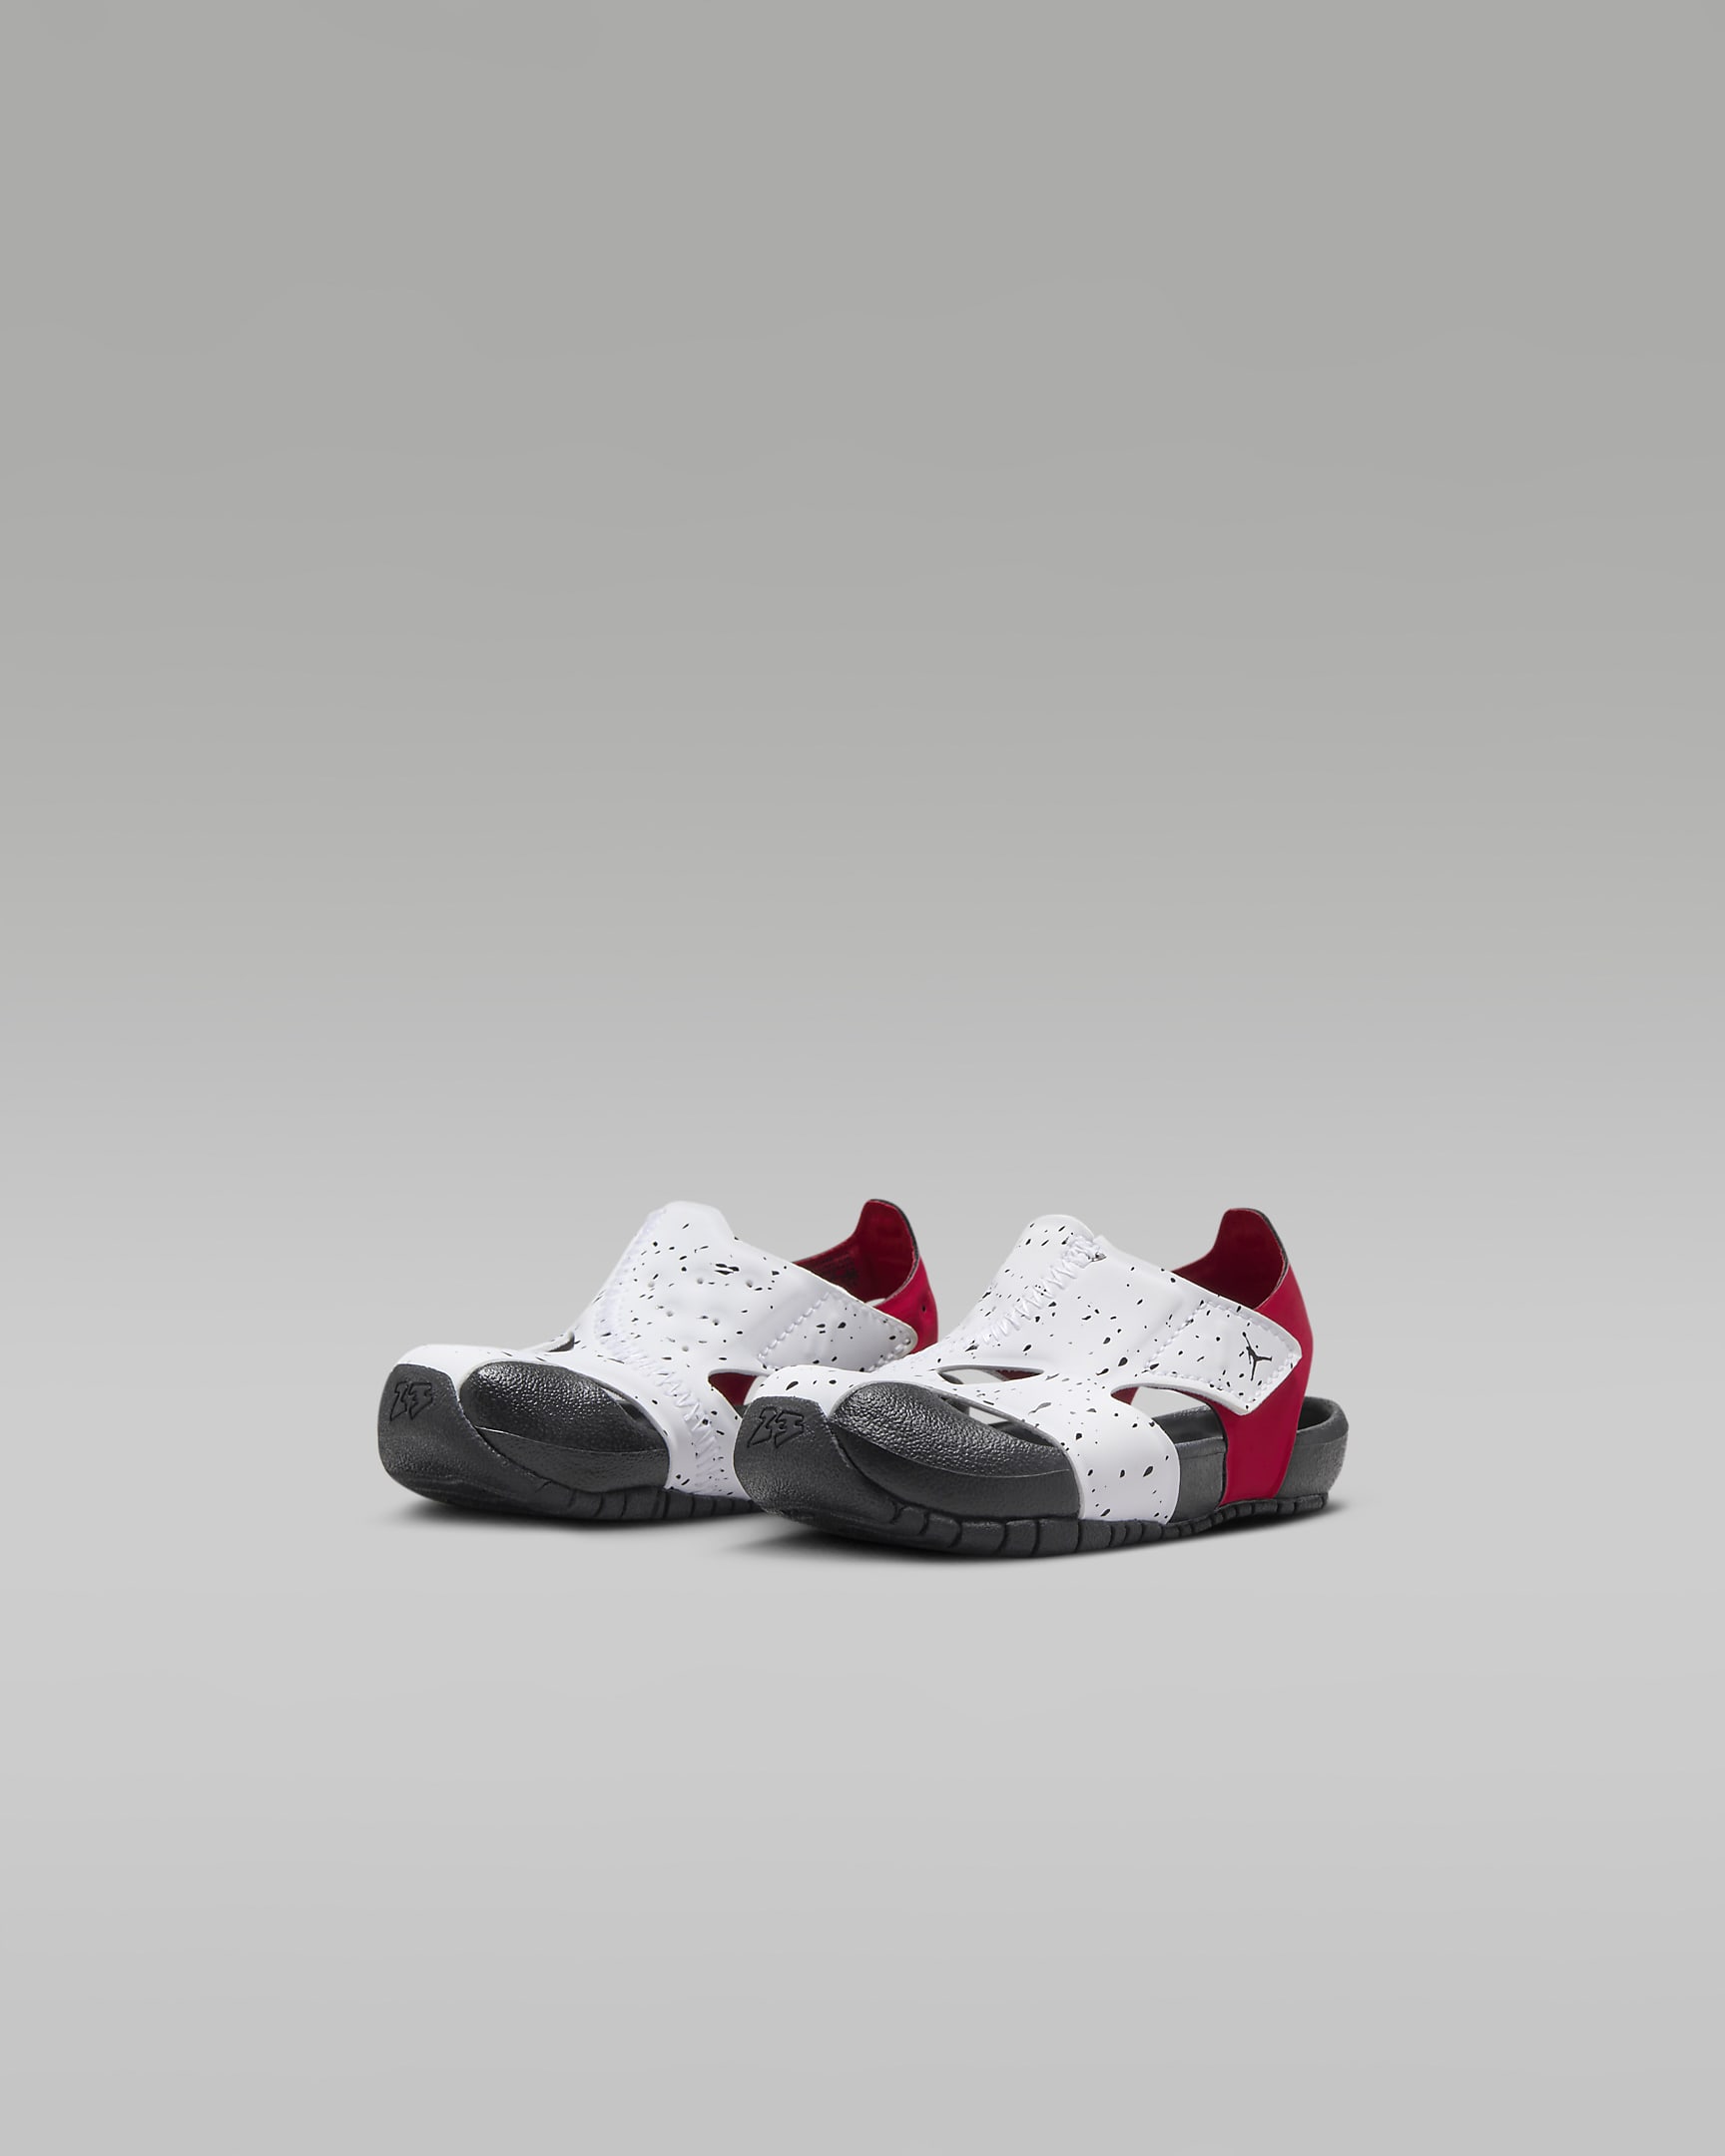 Jordan Flare Baby and Toddler Shoe - White/Gym Red/Black